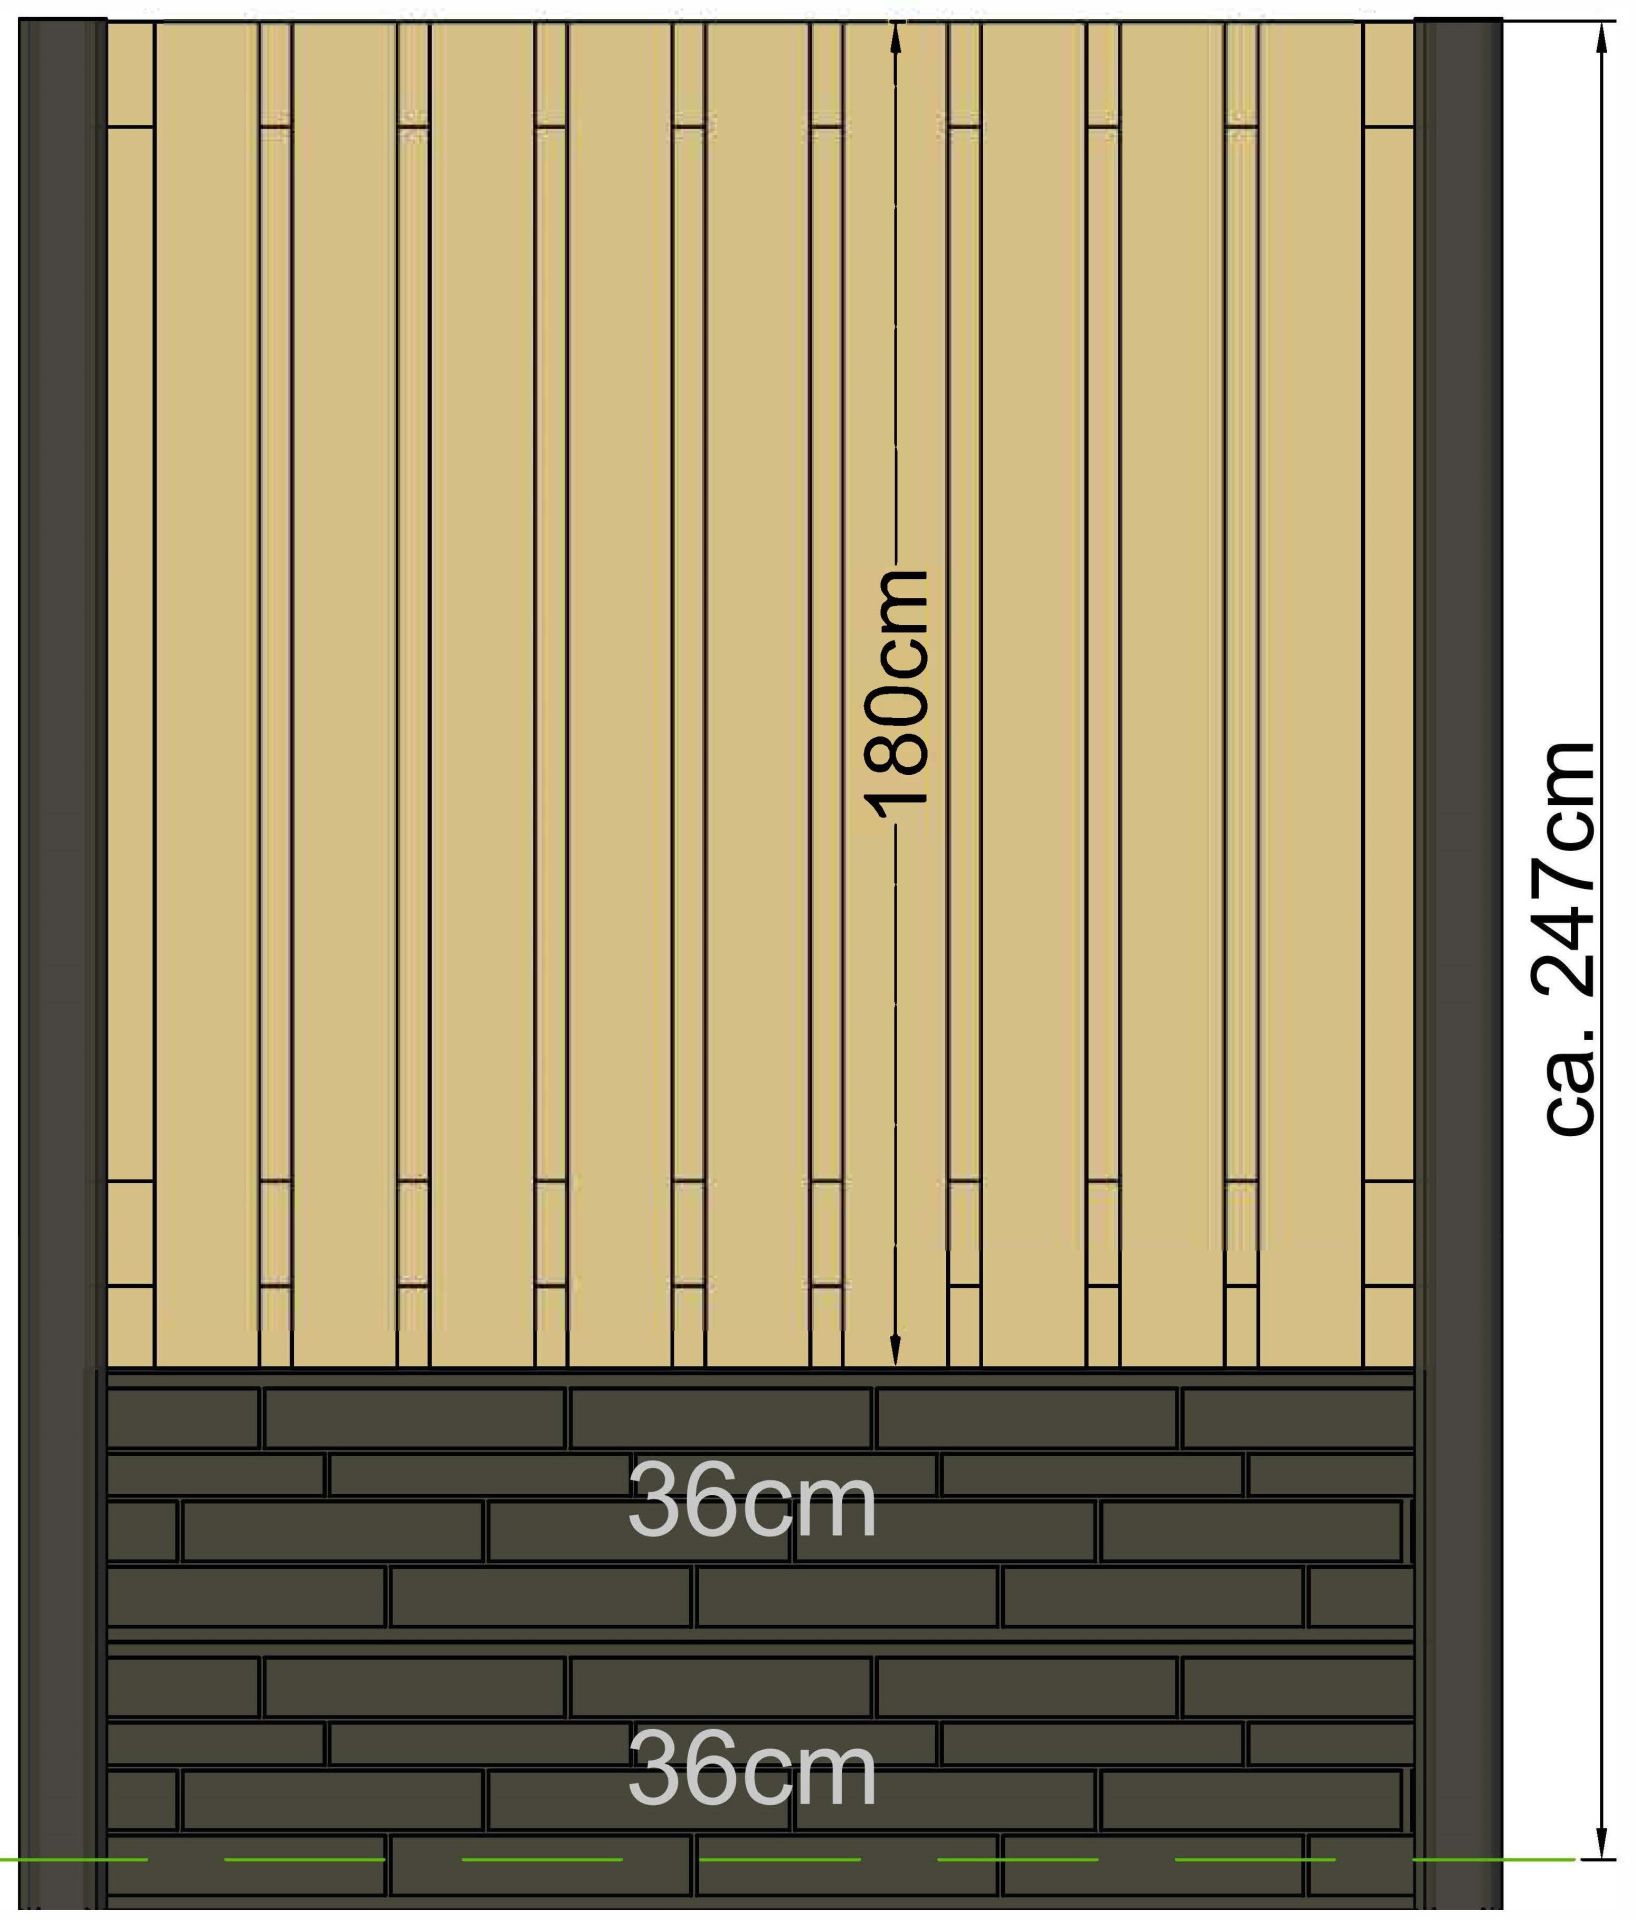 1×54316 Beton stolpe _316cm_2_1920x1920 PETER-HOLMBERG